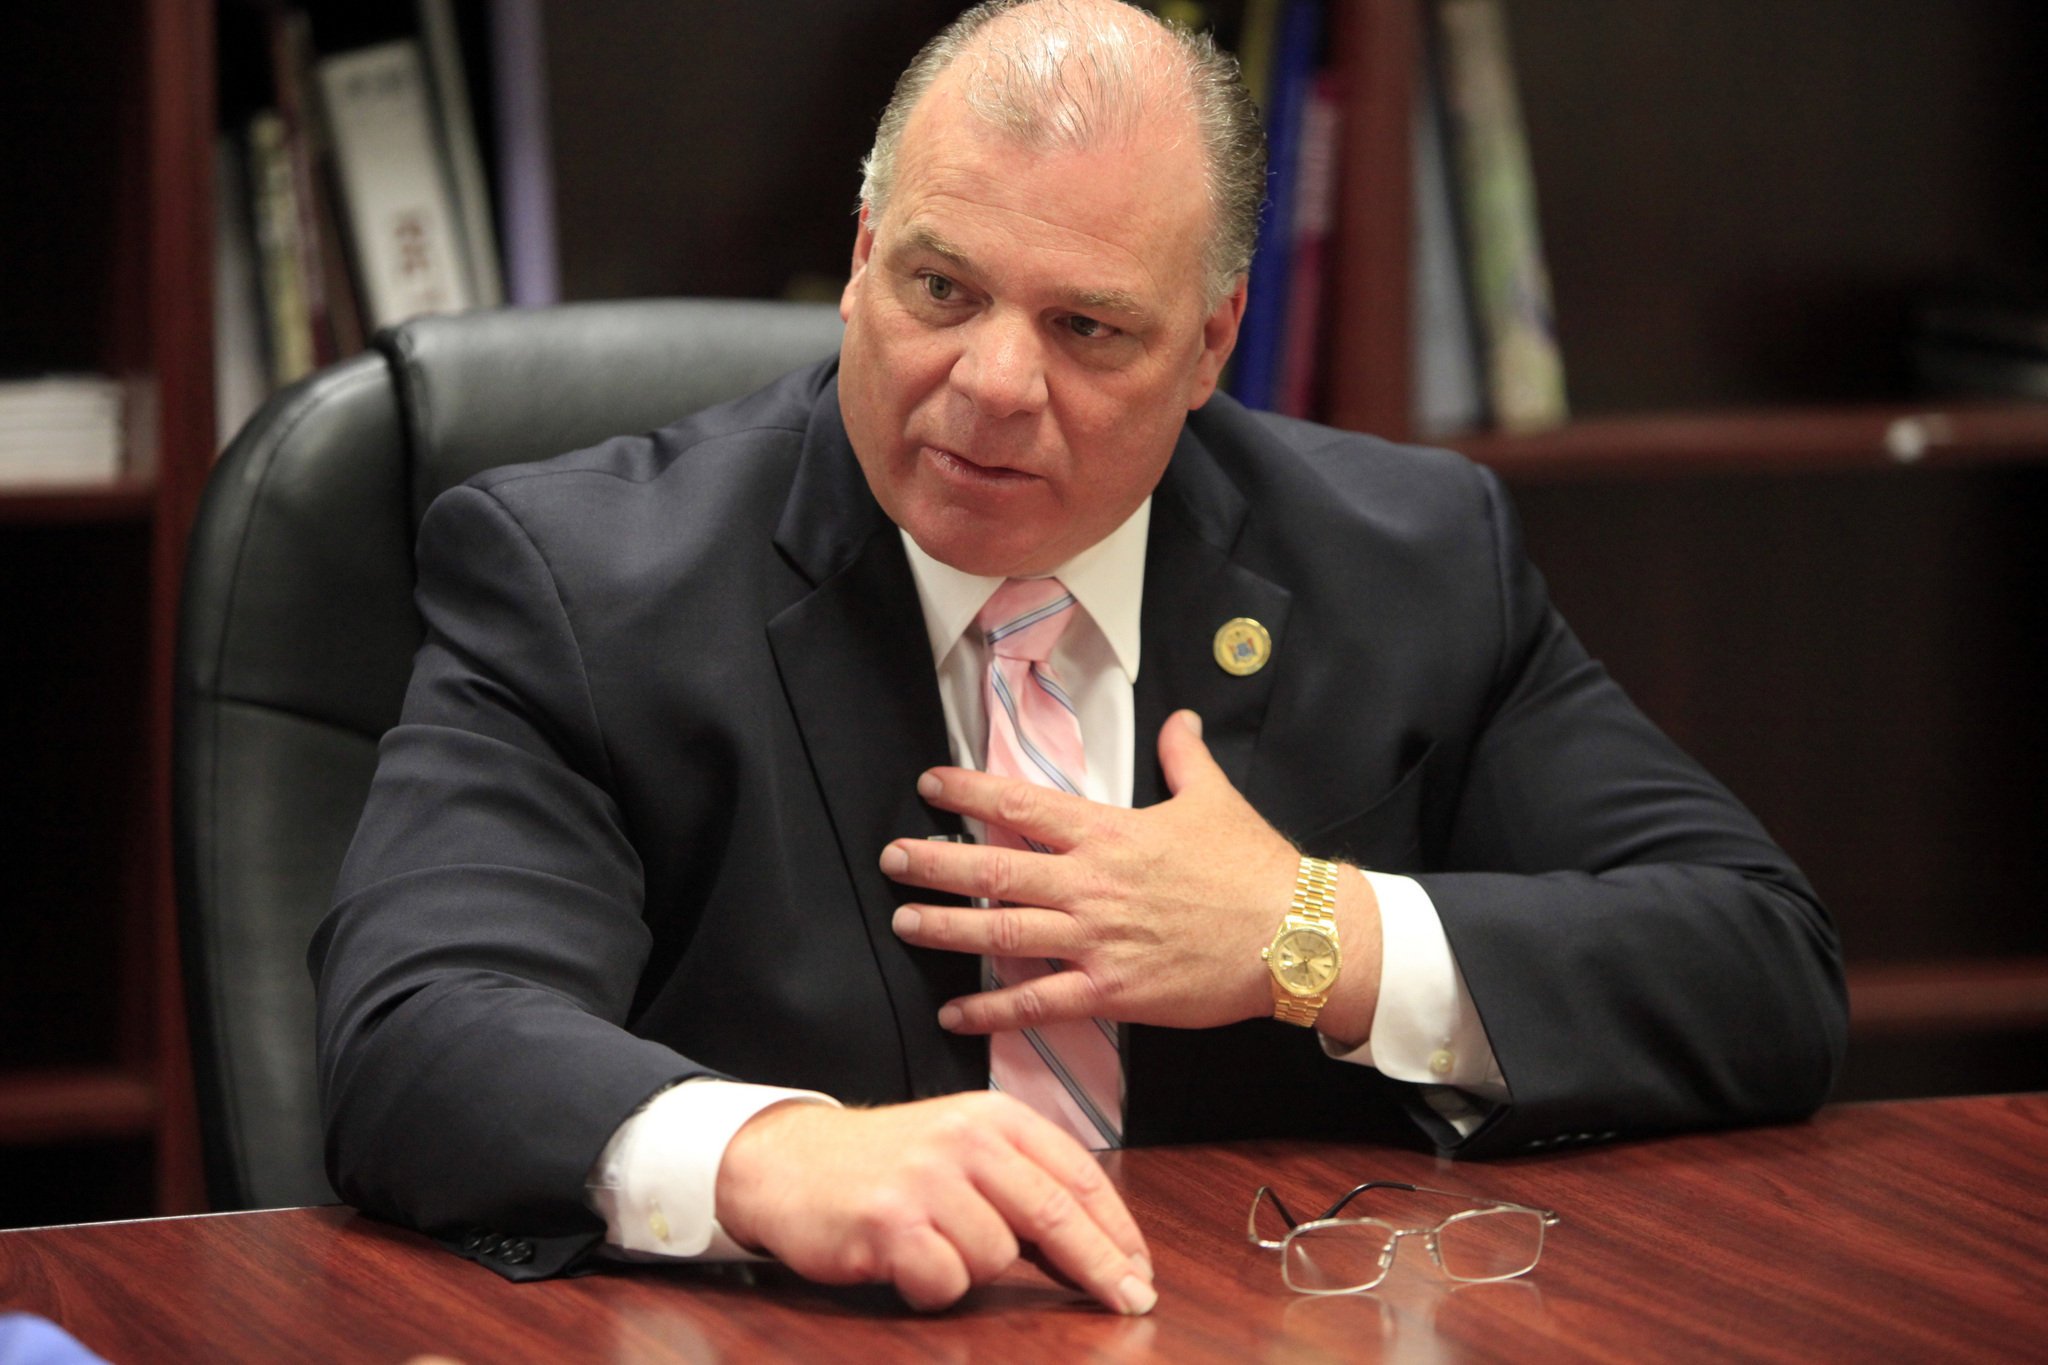 NJ Senate President Steve Sweeney Says Atlantic City Will